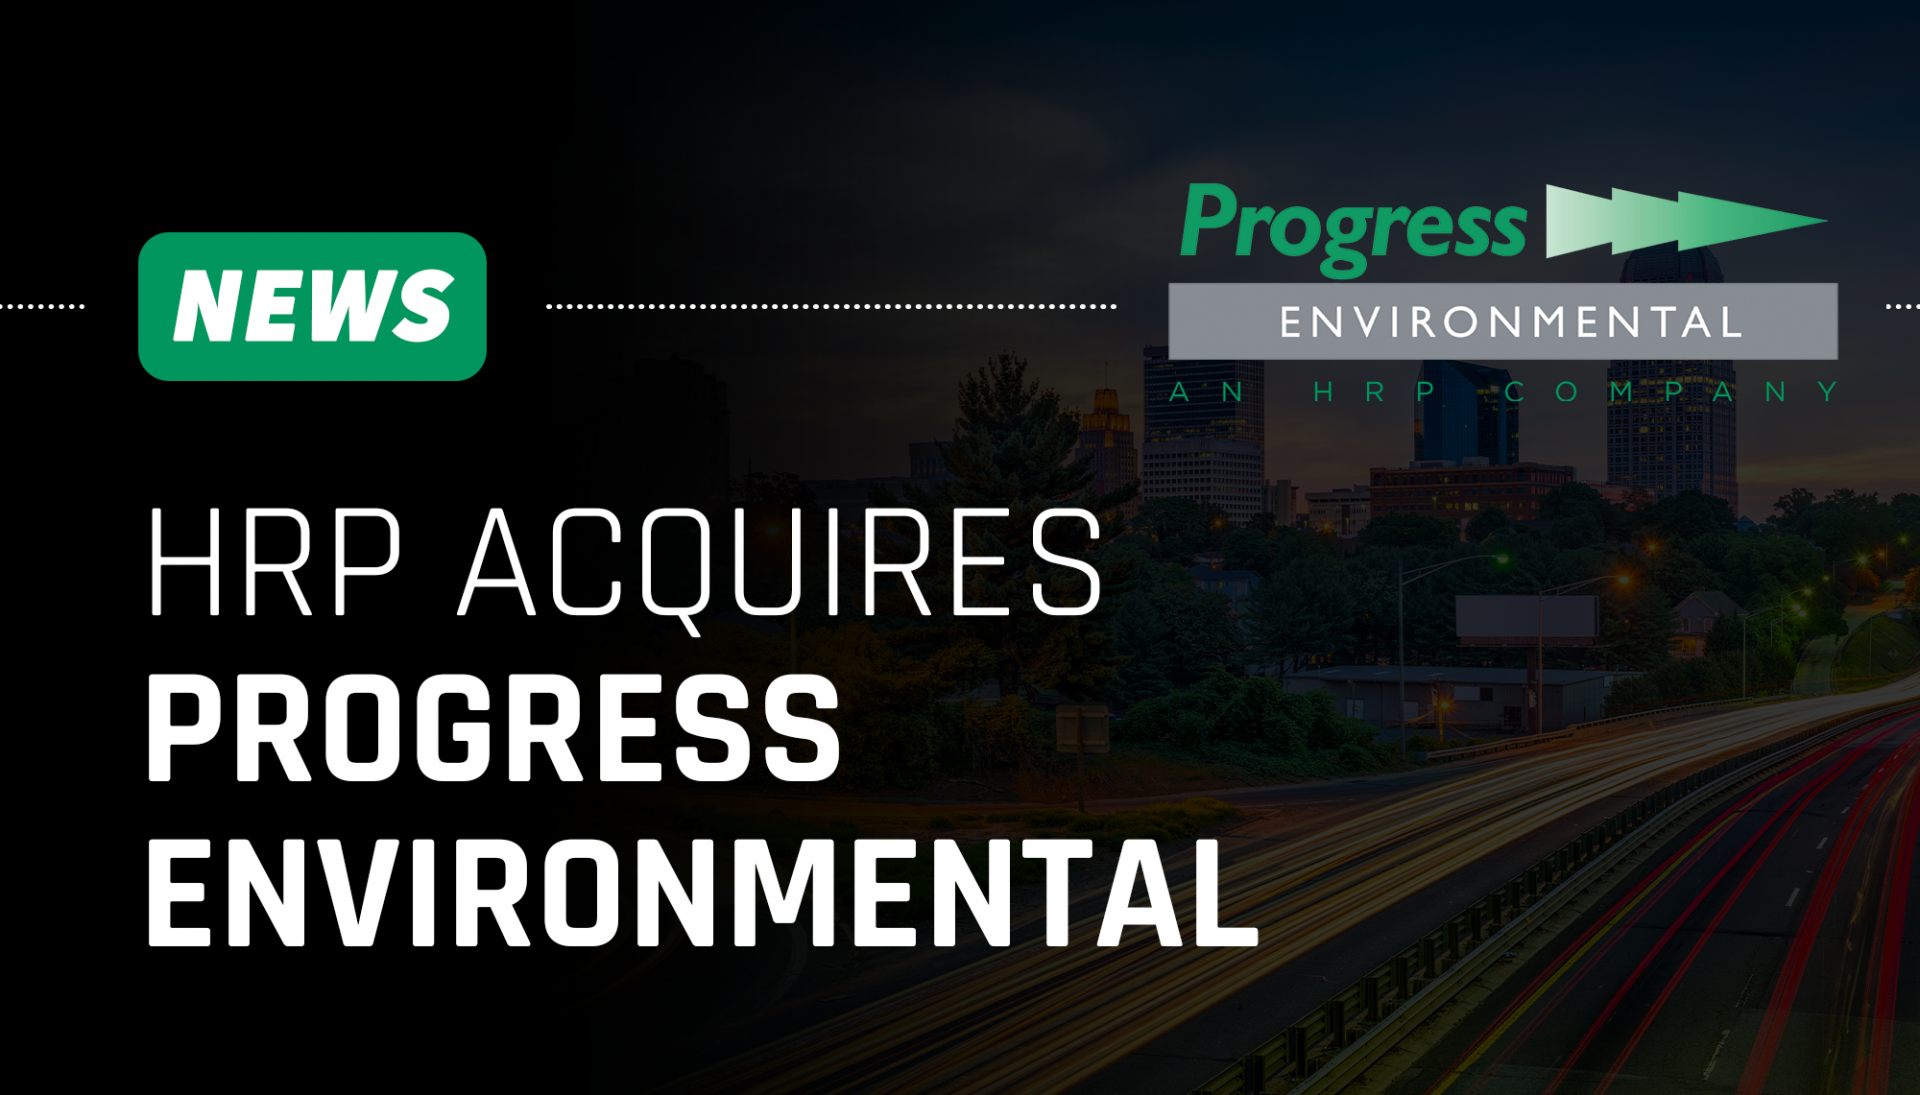 PRESS RELEASE: HRP Acquires Progress Environmental Group, Inc.